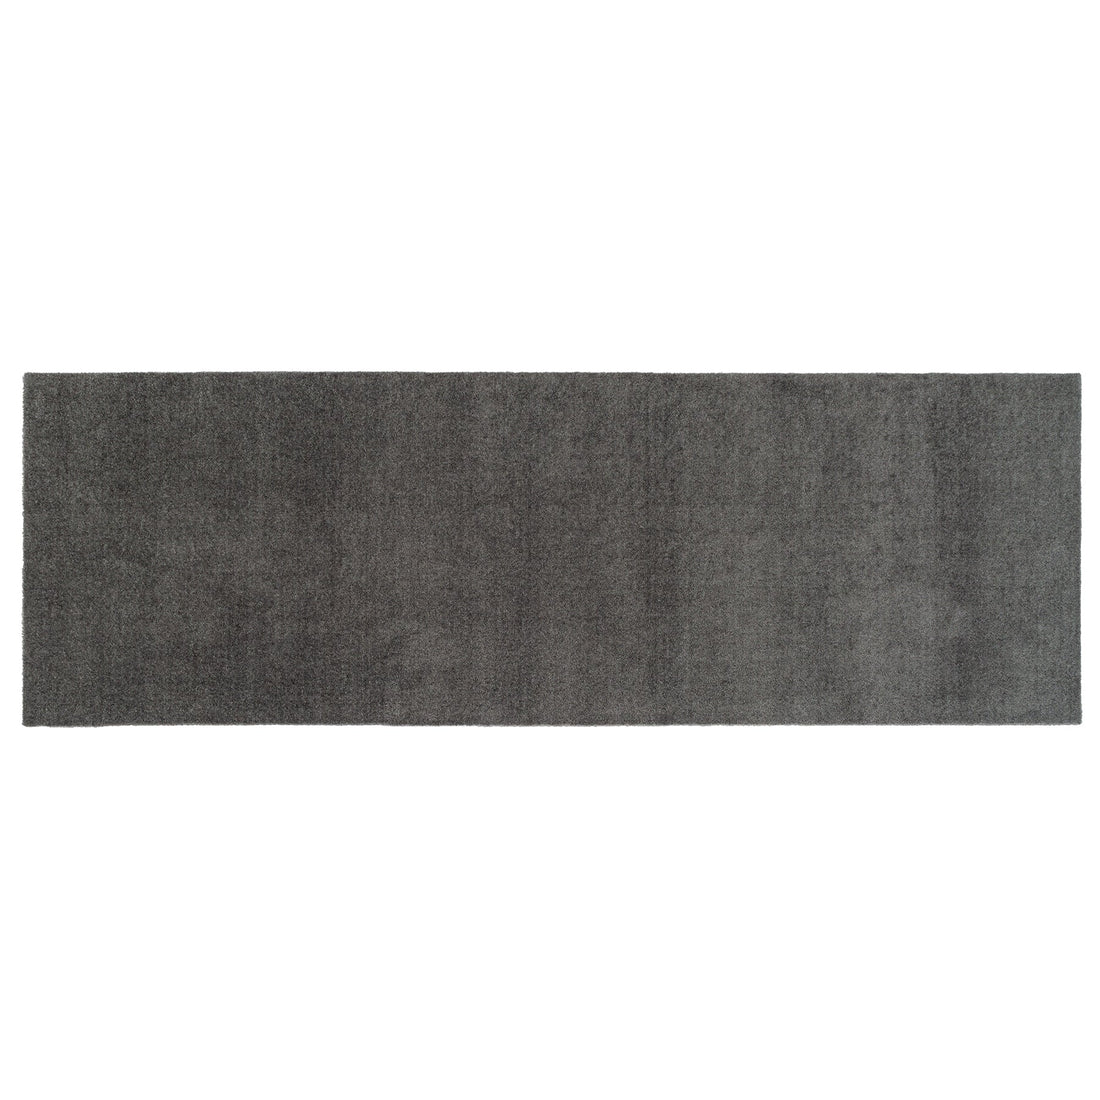 Blanket/had 67 x 200 cm - Uni Color/Gray